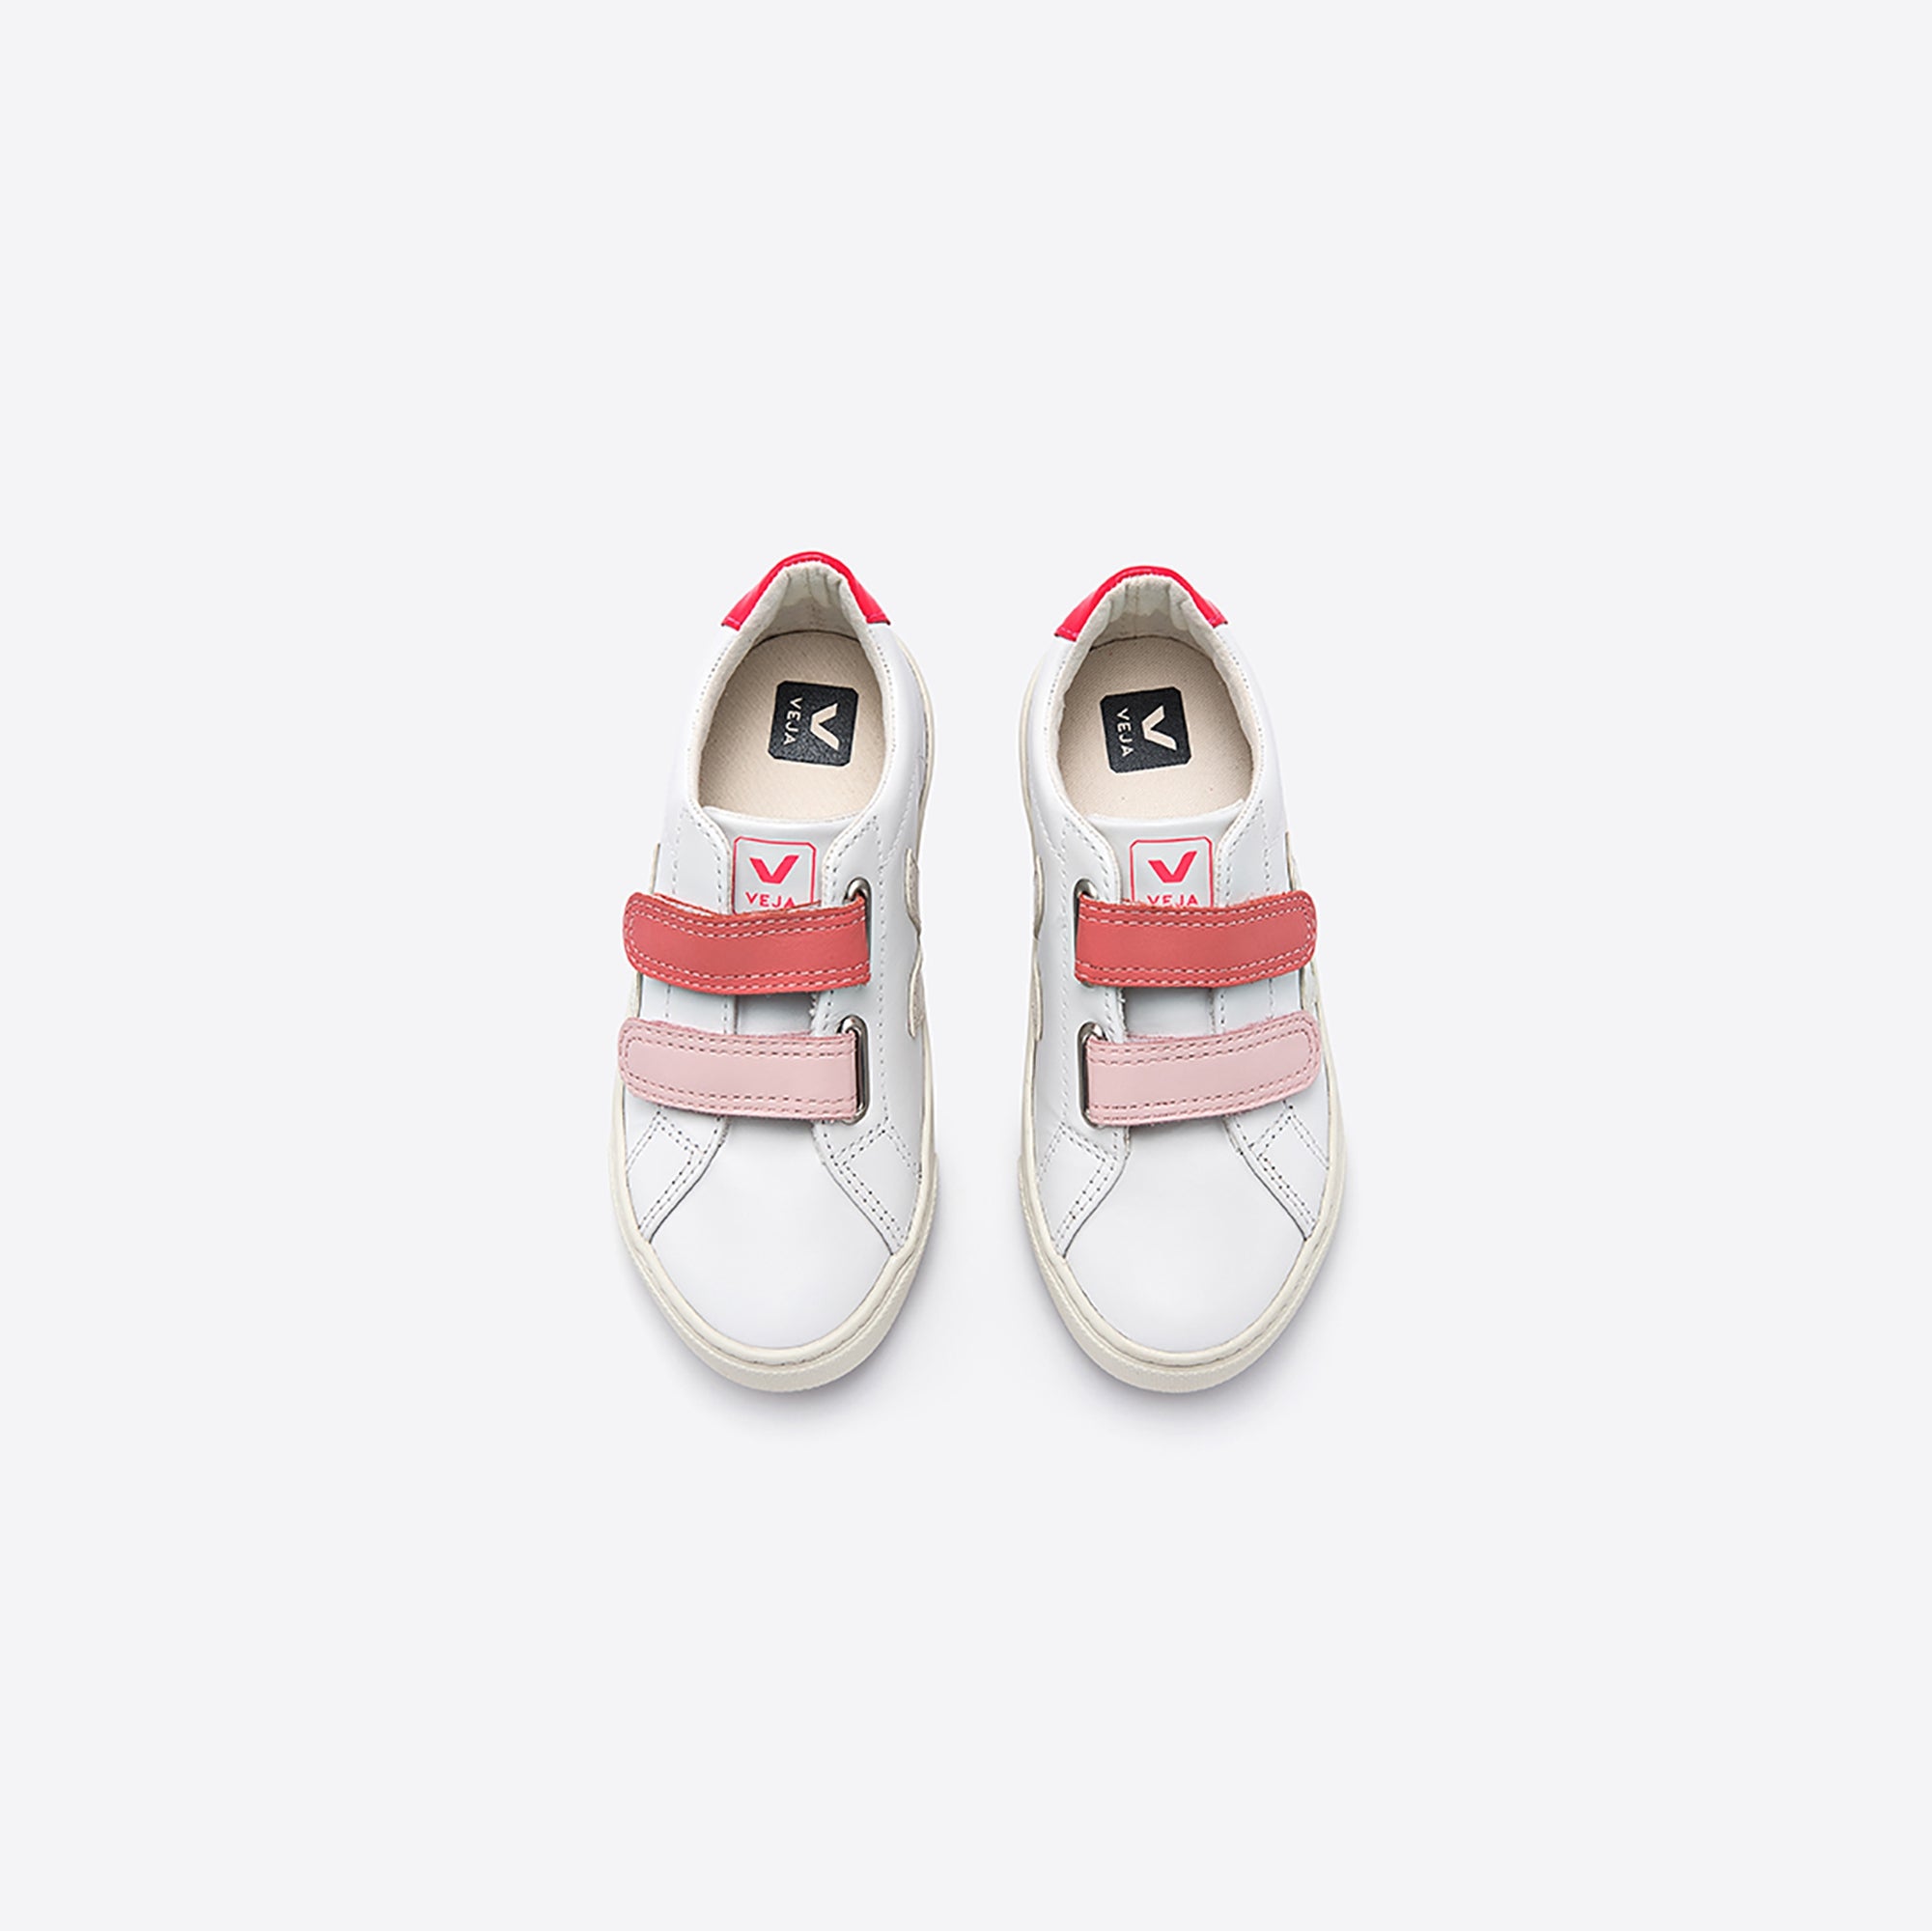 Girls White & Pink "V" Shoes